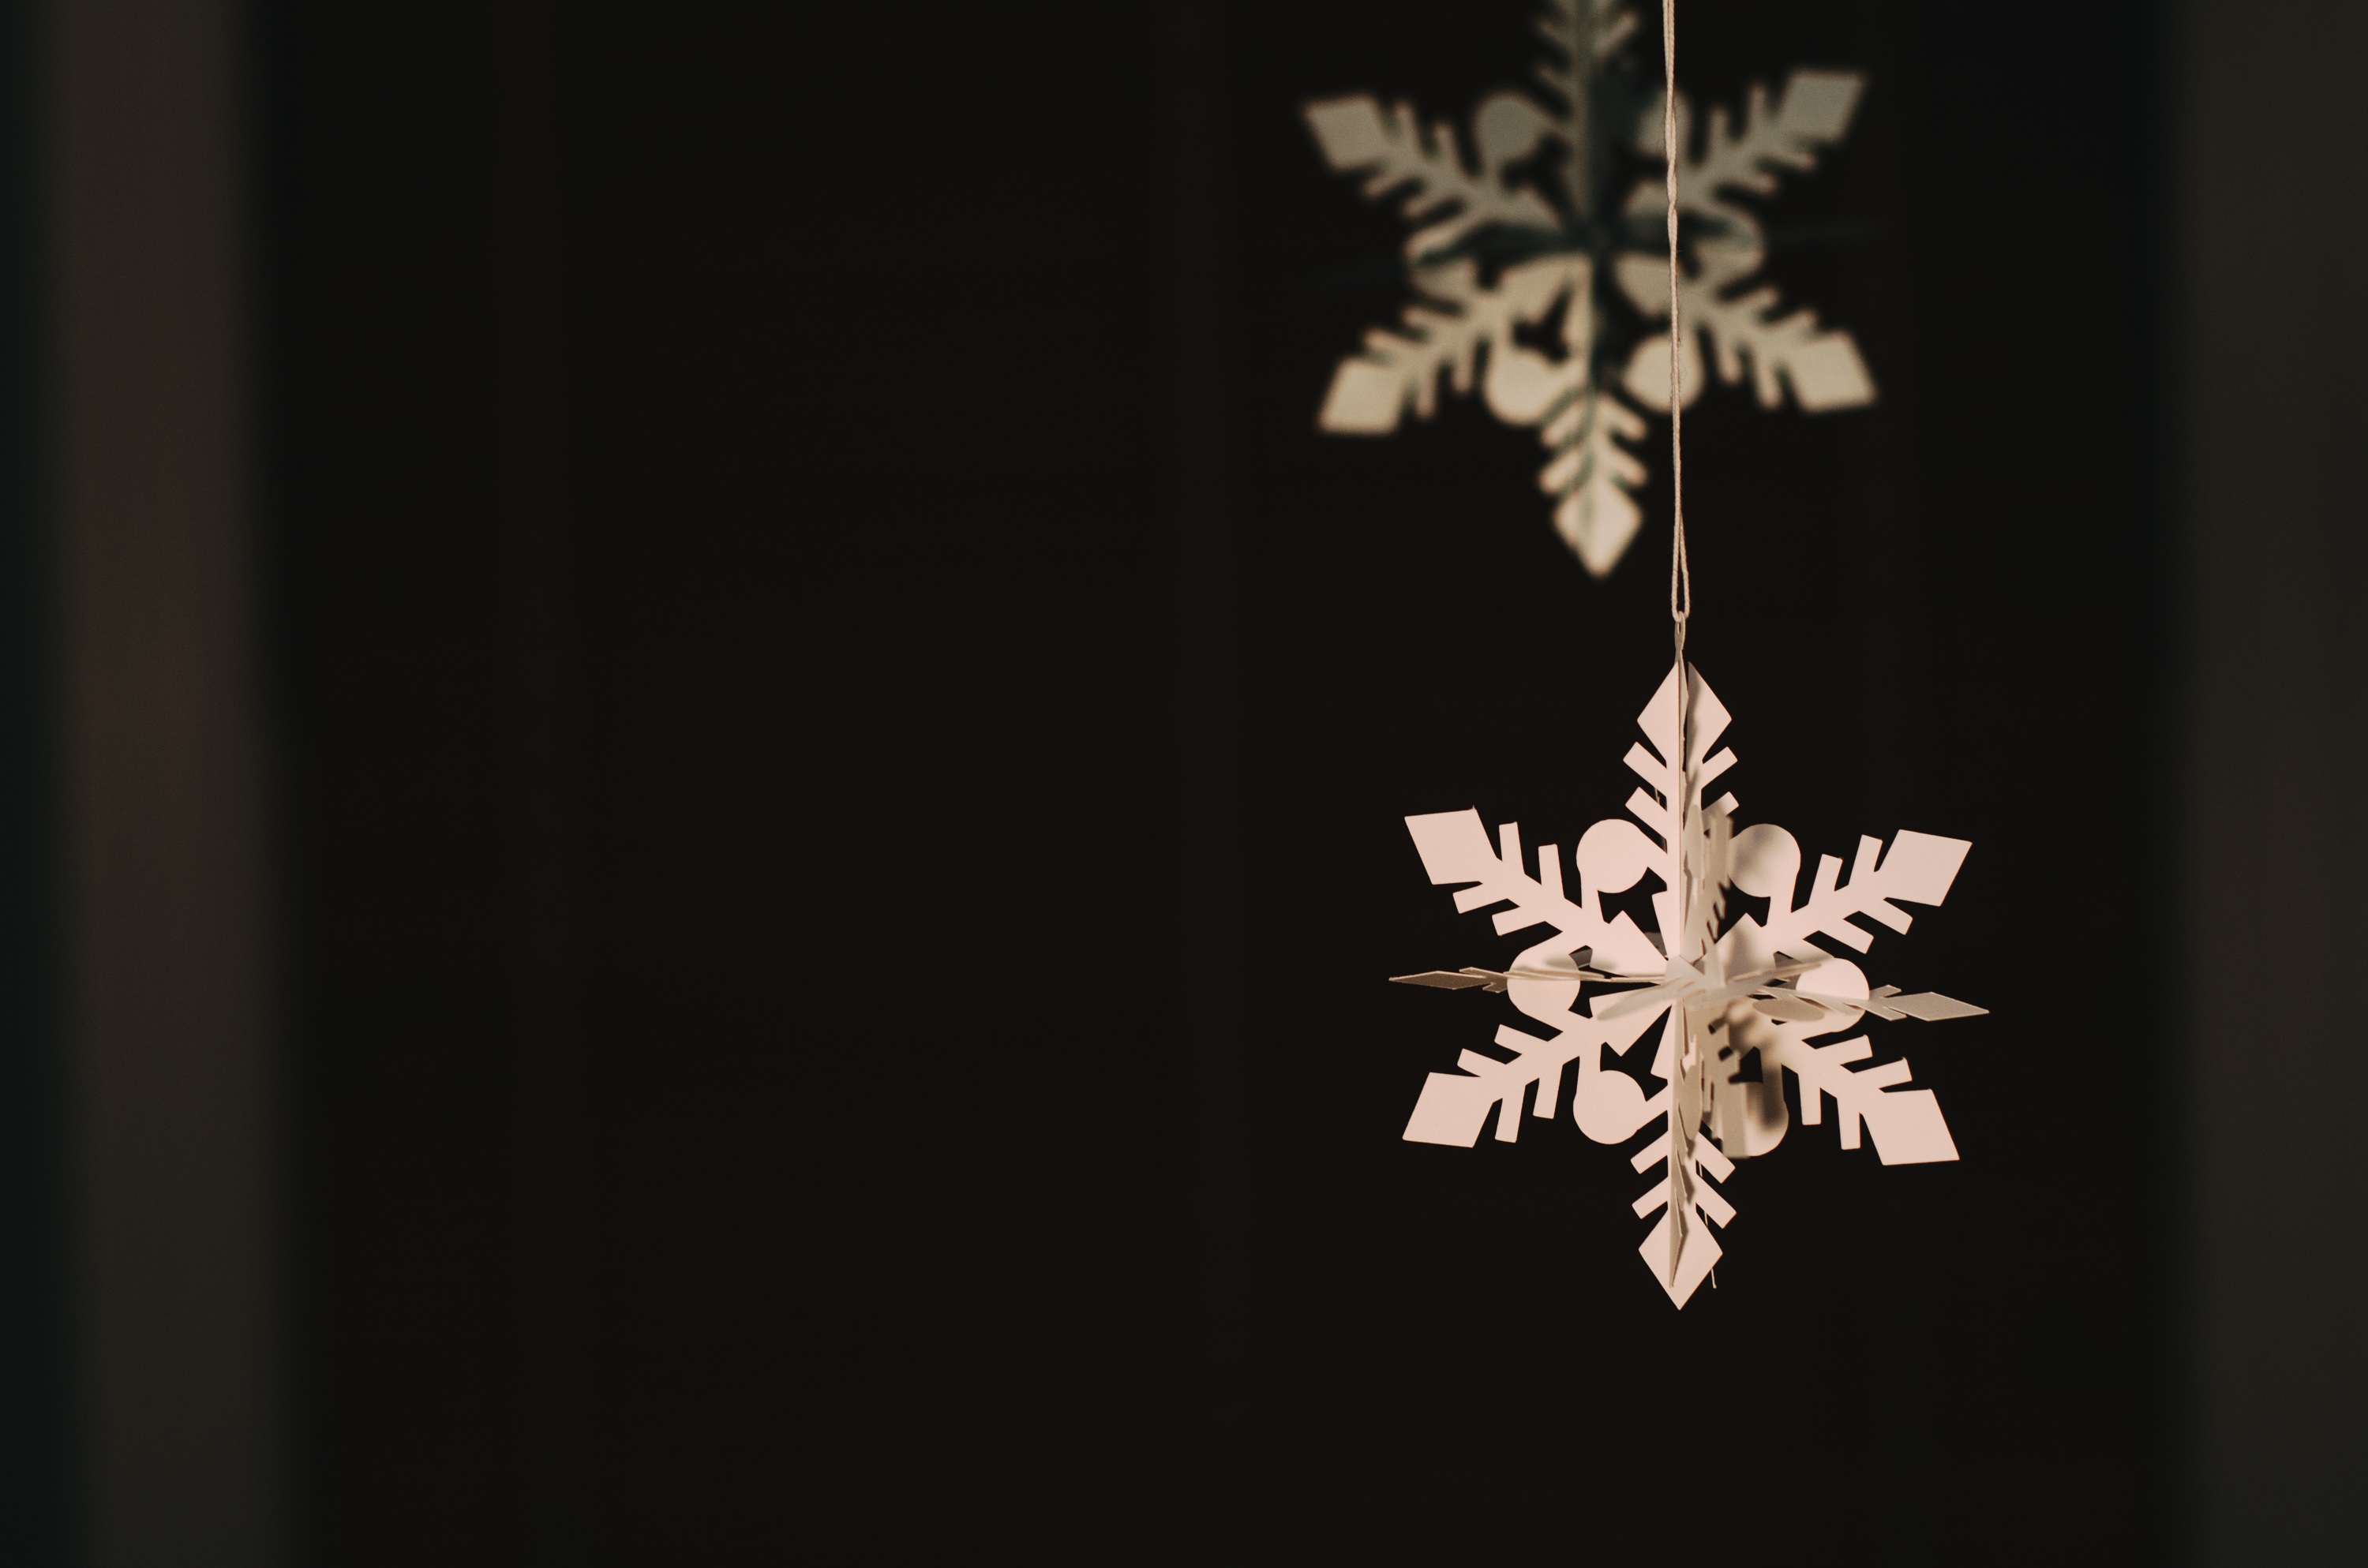 A snowflake ornament